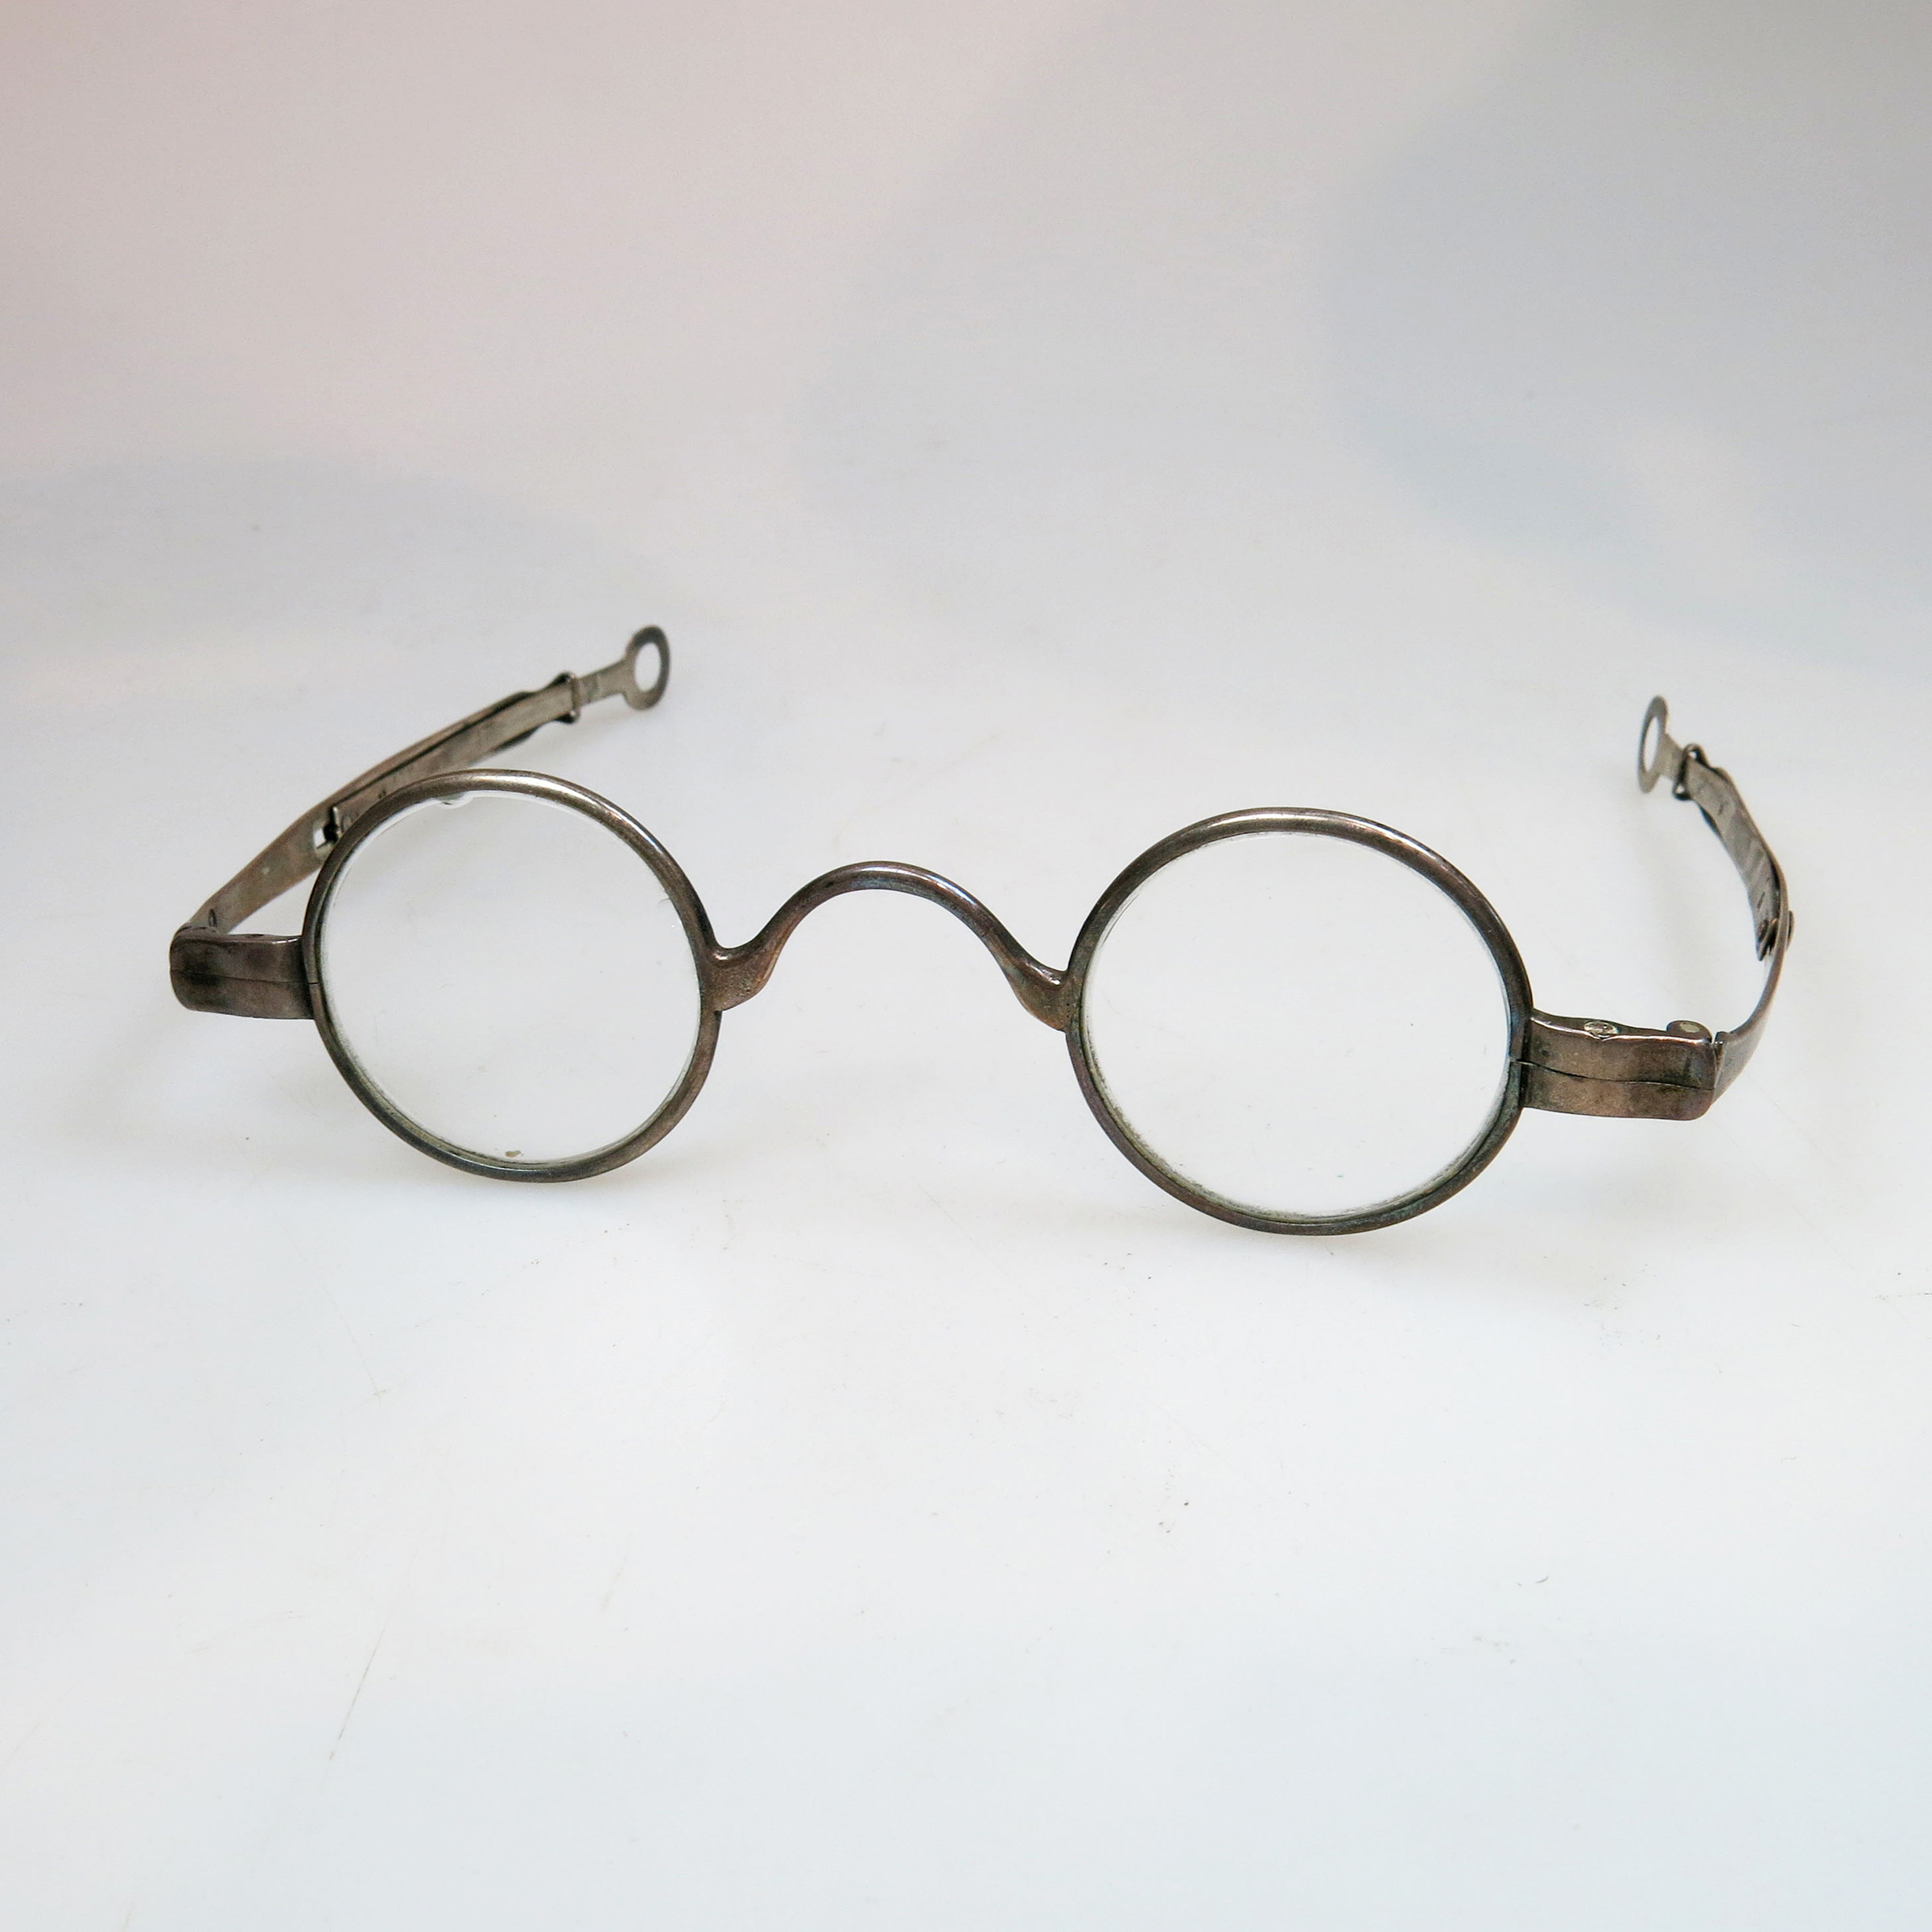 Pair Of George III Spectacles